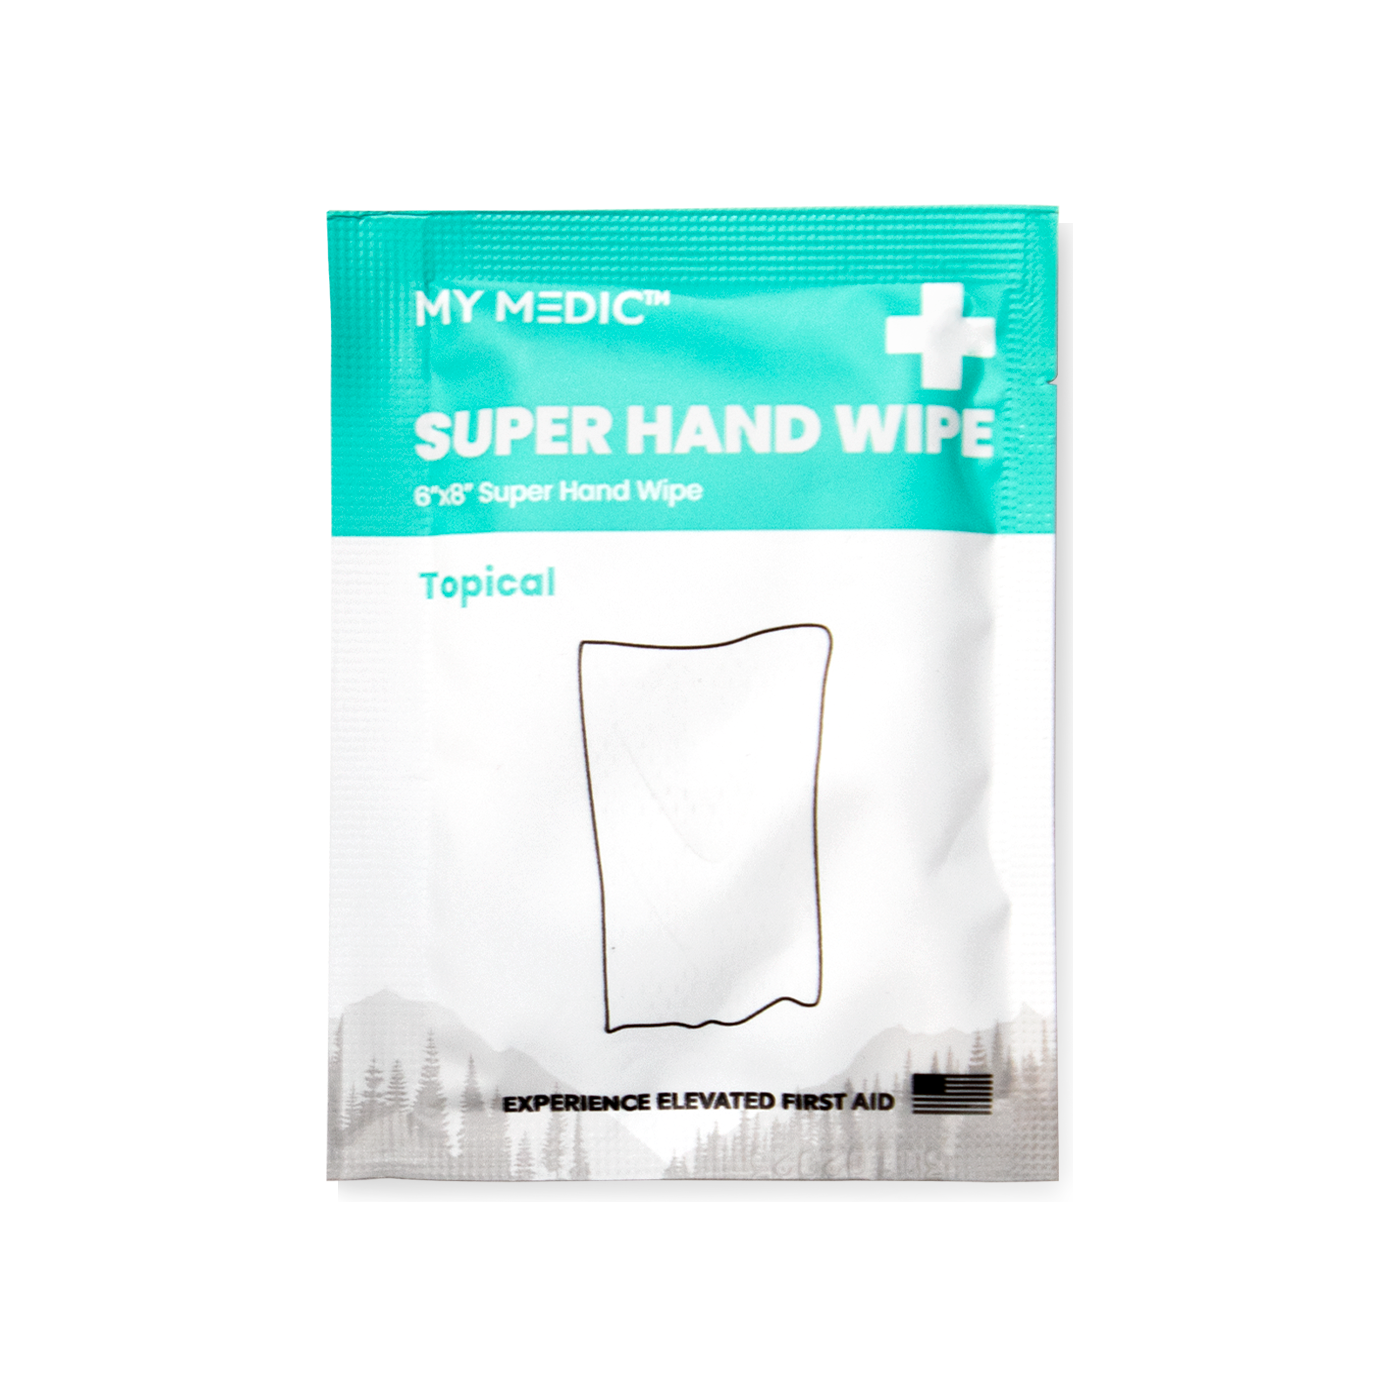 Super Hand Wipe